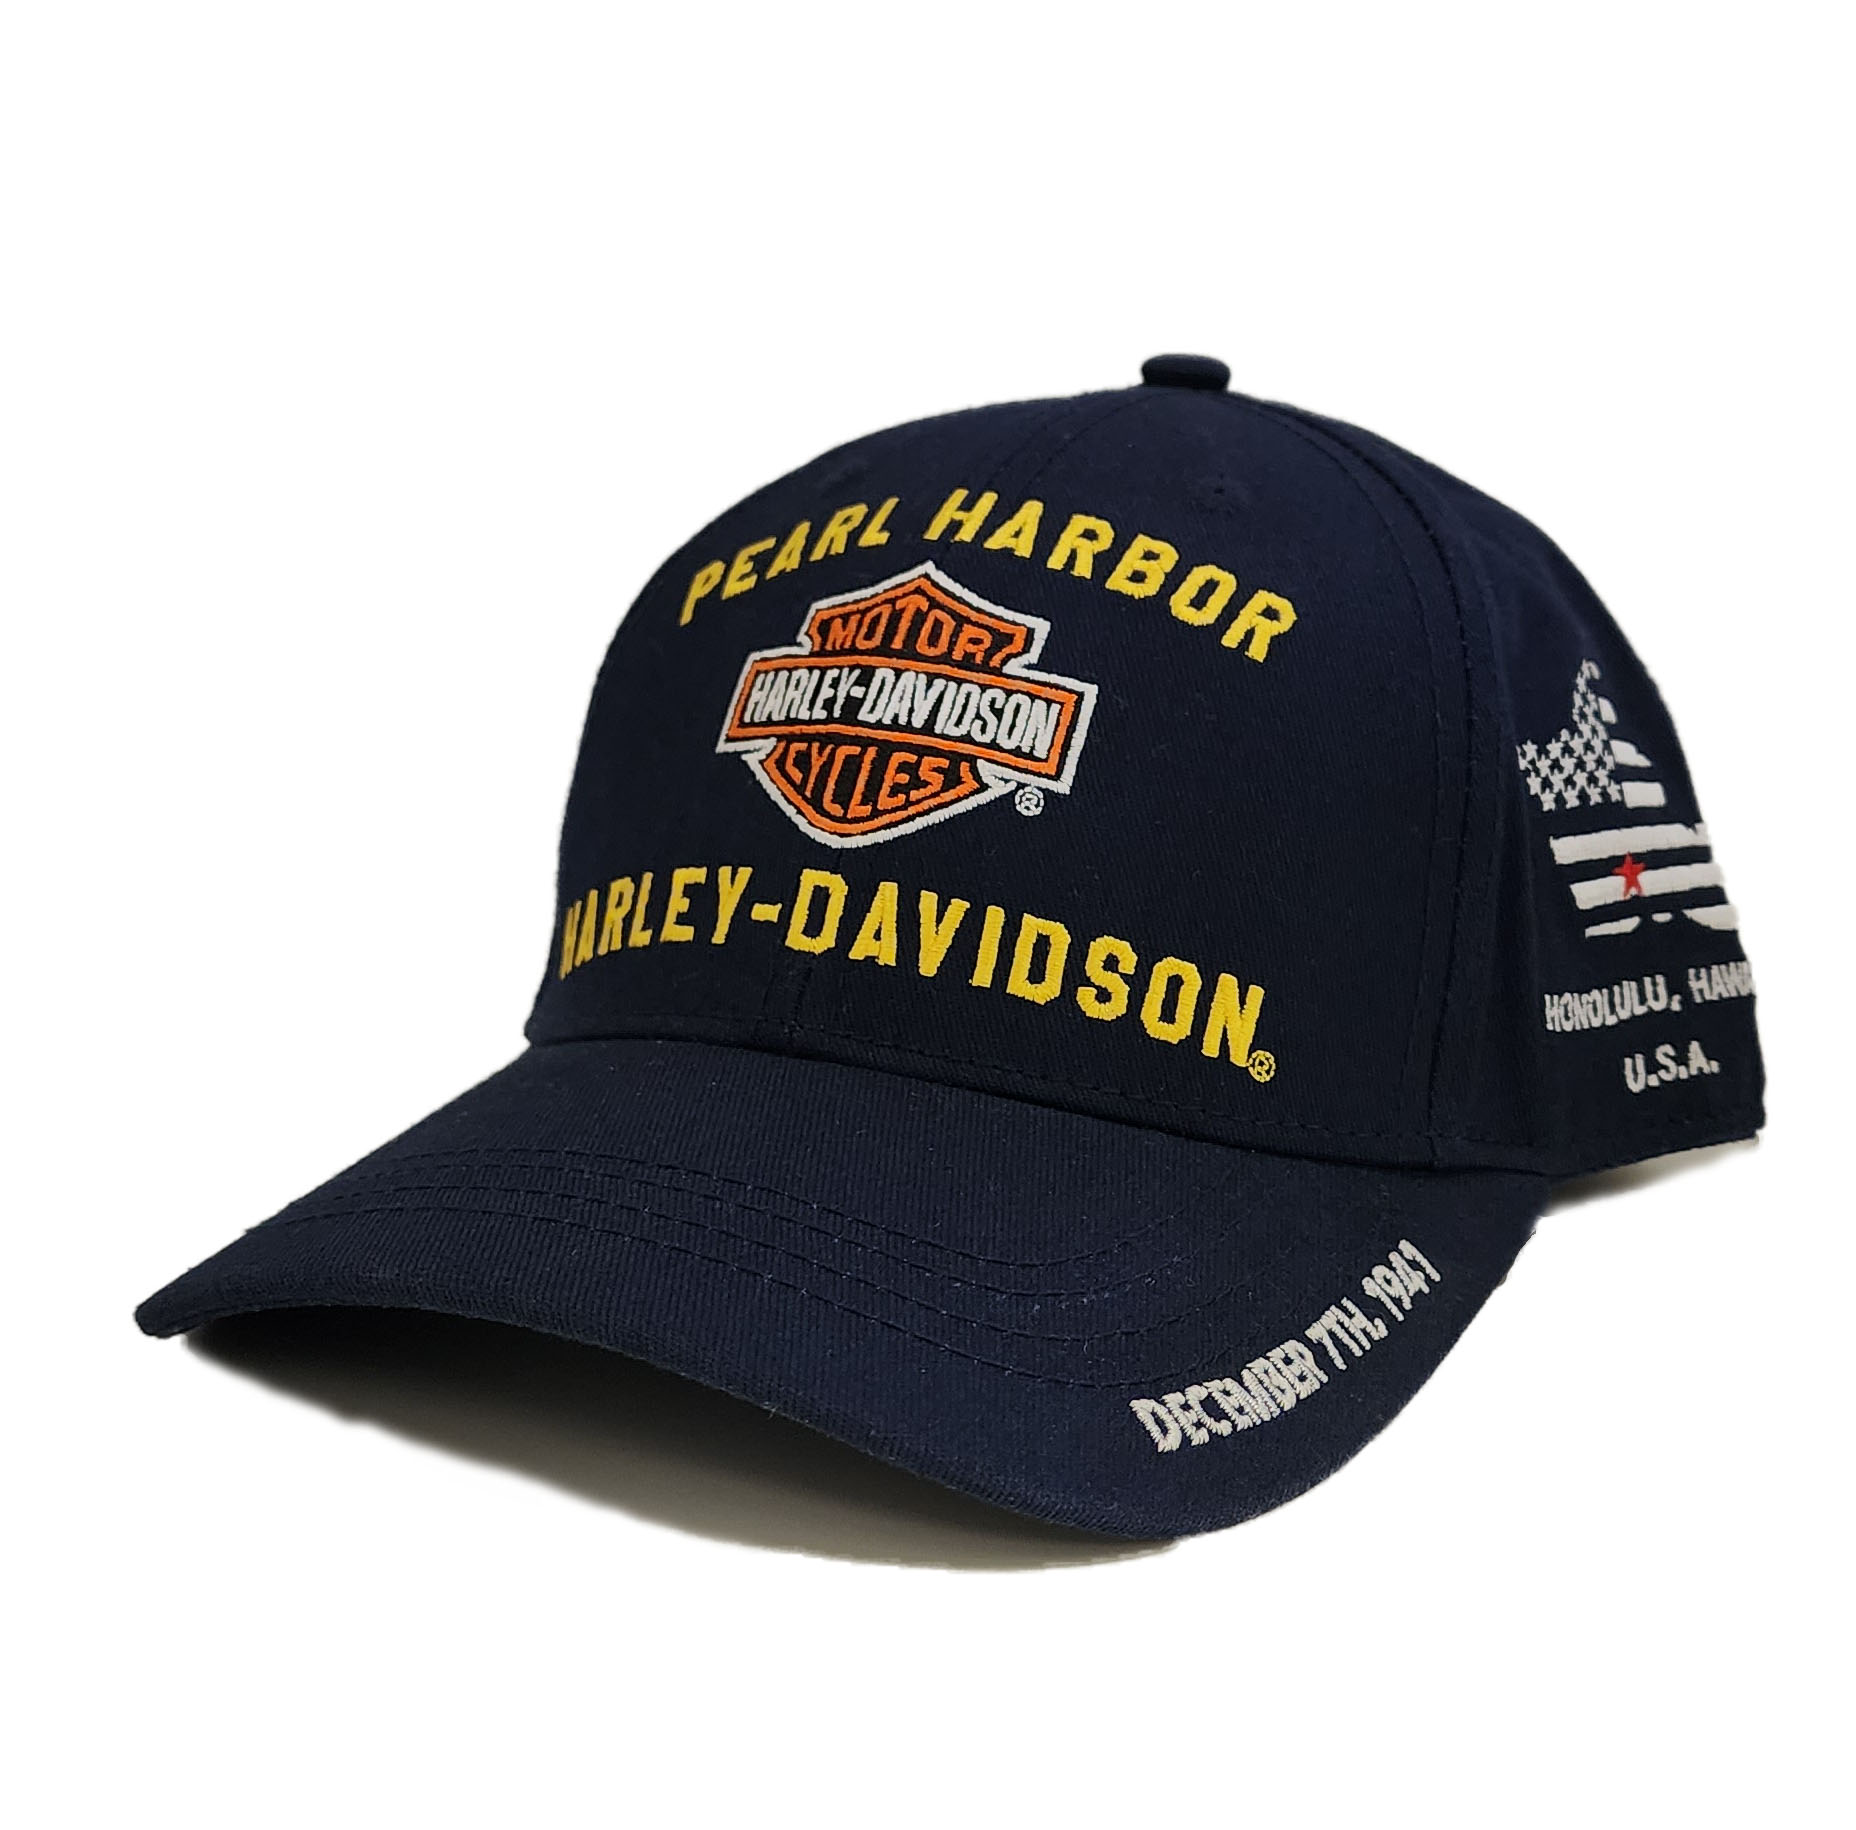 Harley-Davidson Pearl Harbor Homage Navy Cap